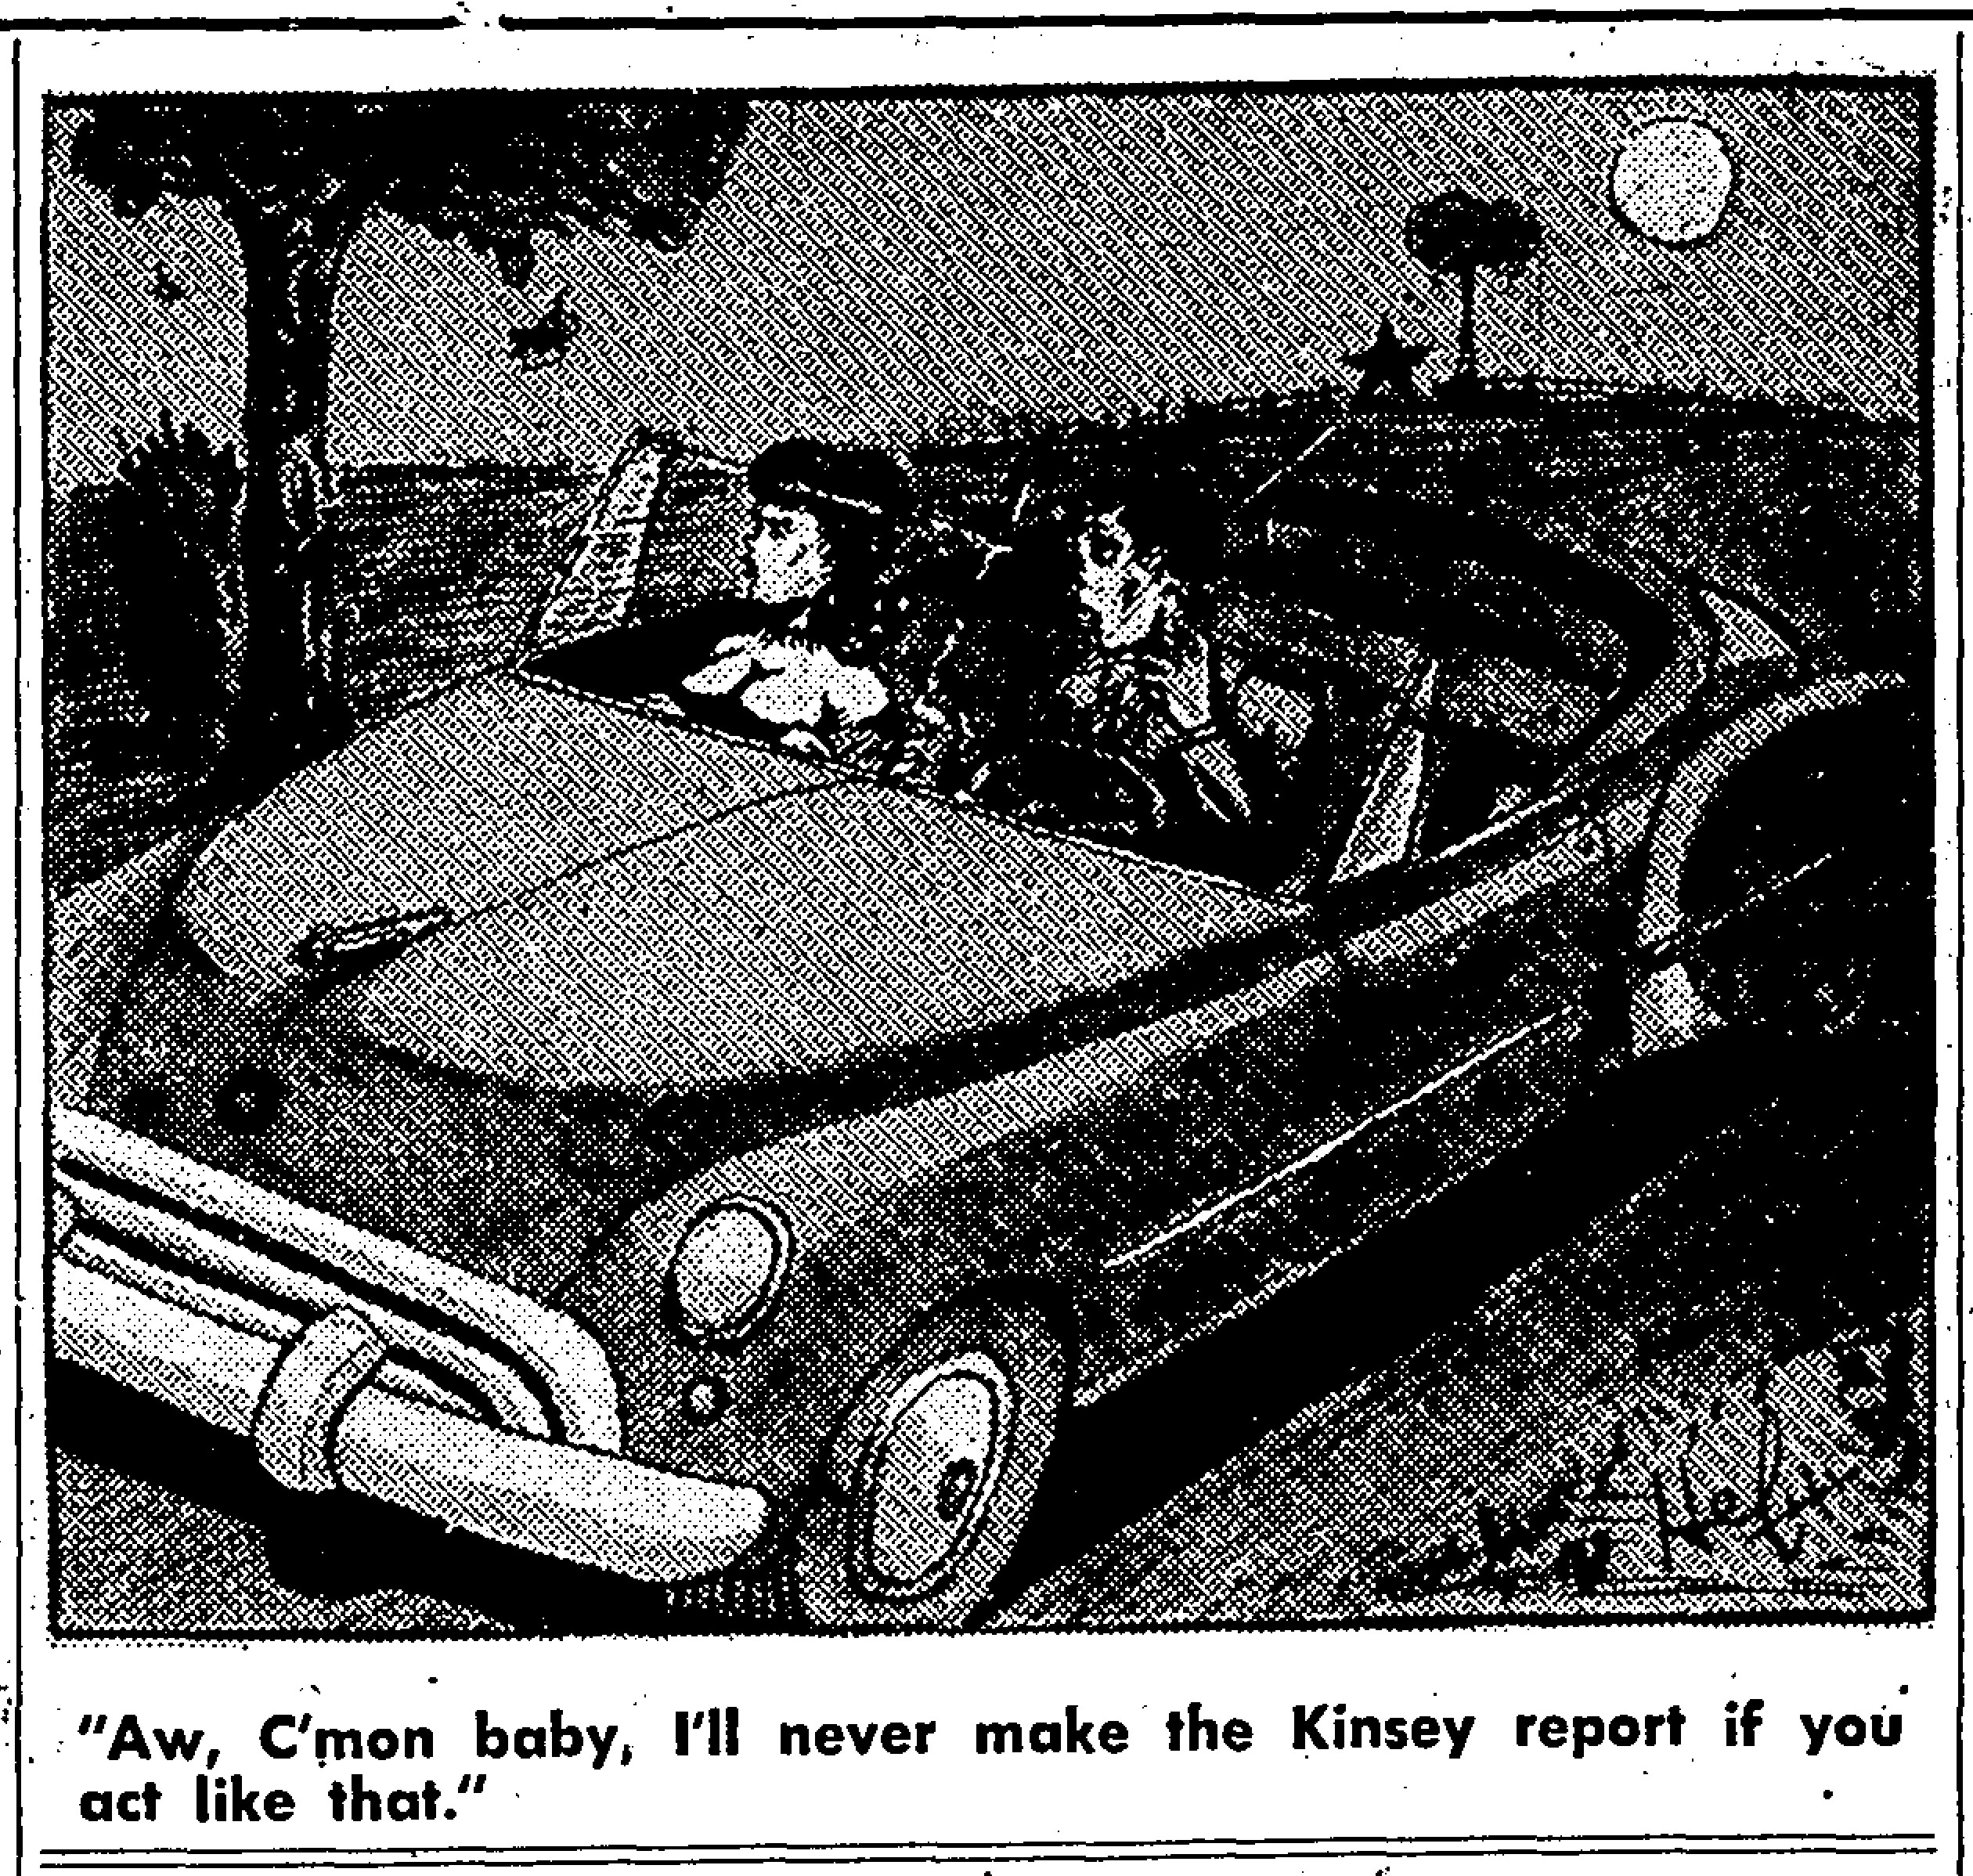 Hefner cartoon from Daily Illini, September 28, 1948 (Courtesy Illini Publishing Co.)